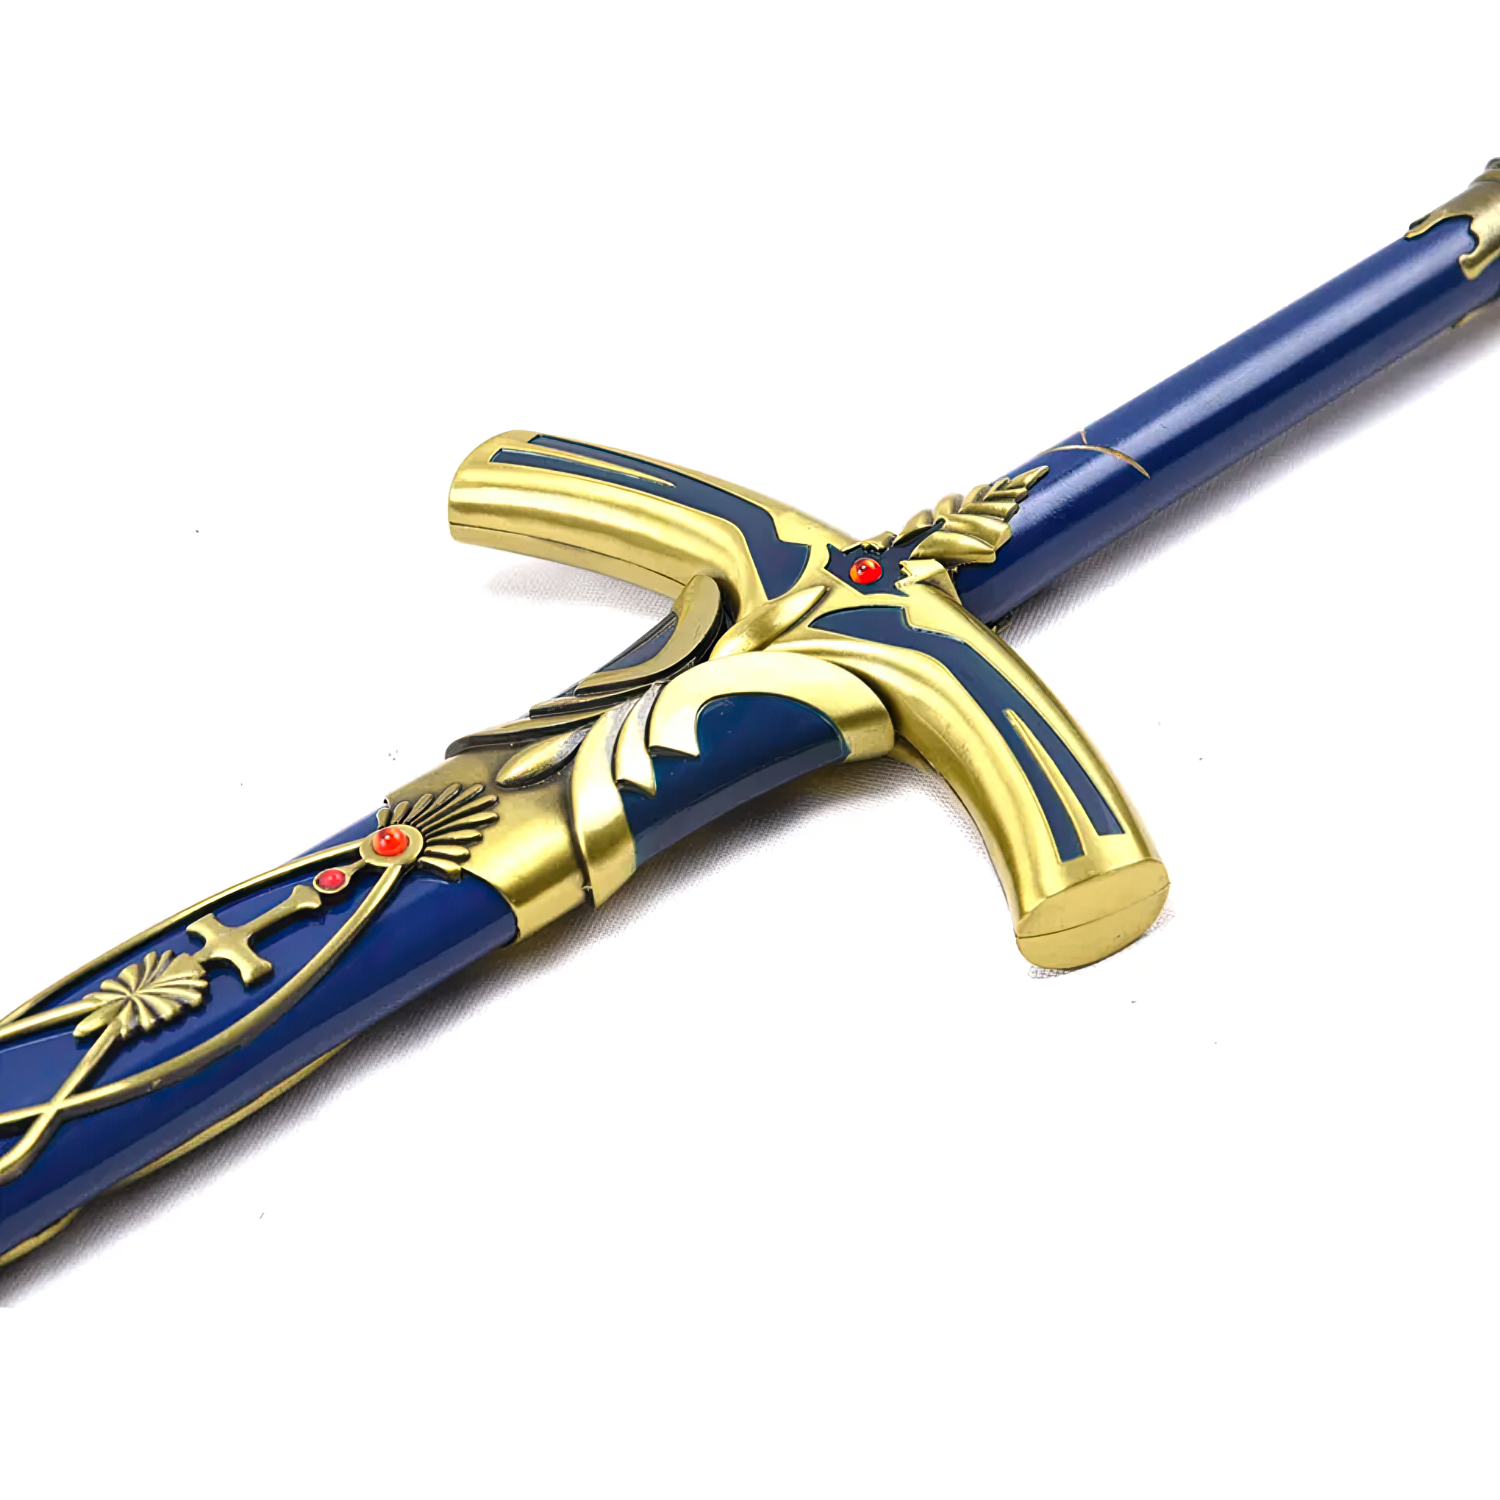 Anime Katana Sword With Scabbard (25 cm) Design 2 - Shubheksha